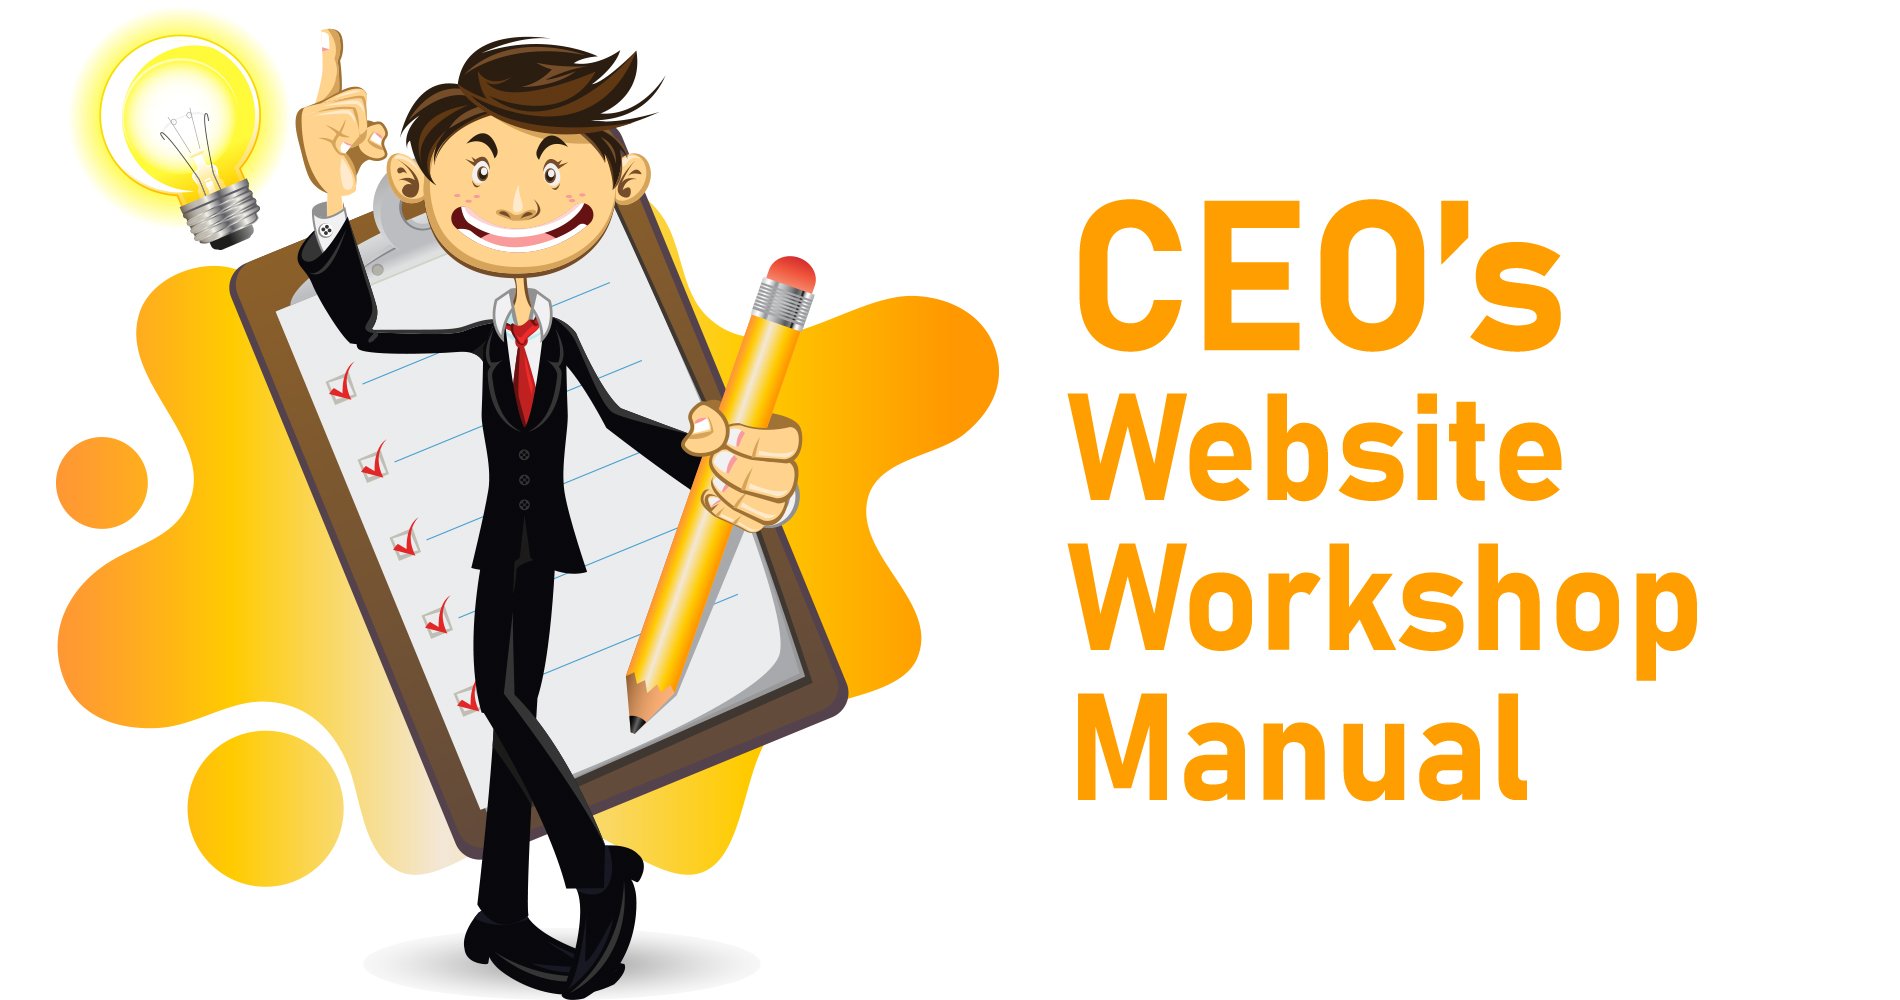 CEO’s Website Workshop Manual